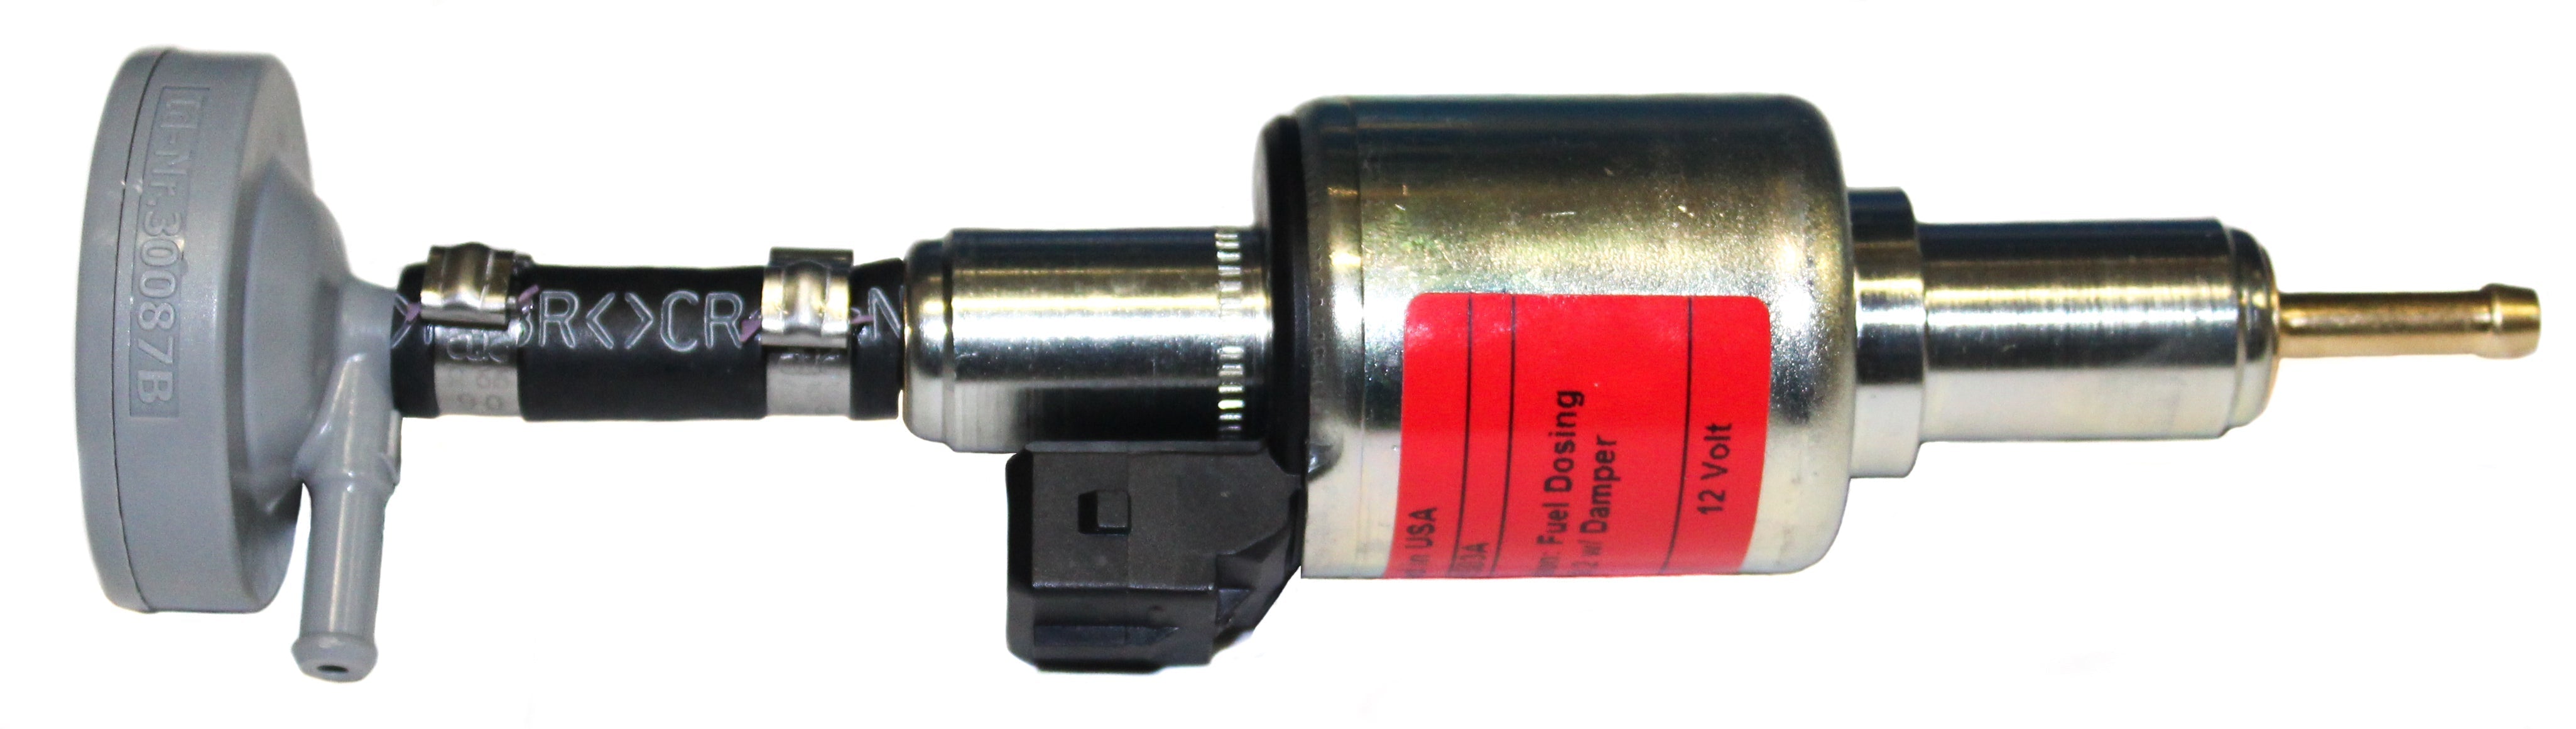 Webasto Fuel Dosing Pump DP30.2 Diesel with Damper 5001503A